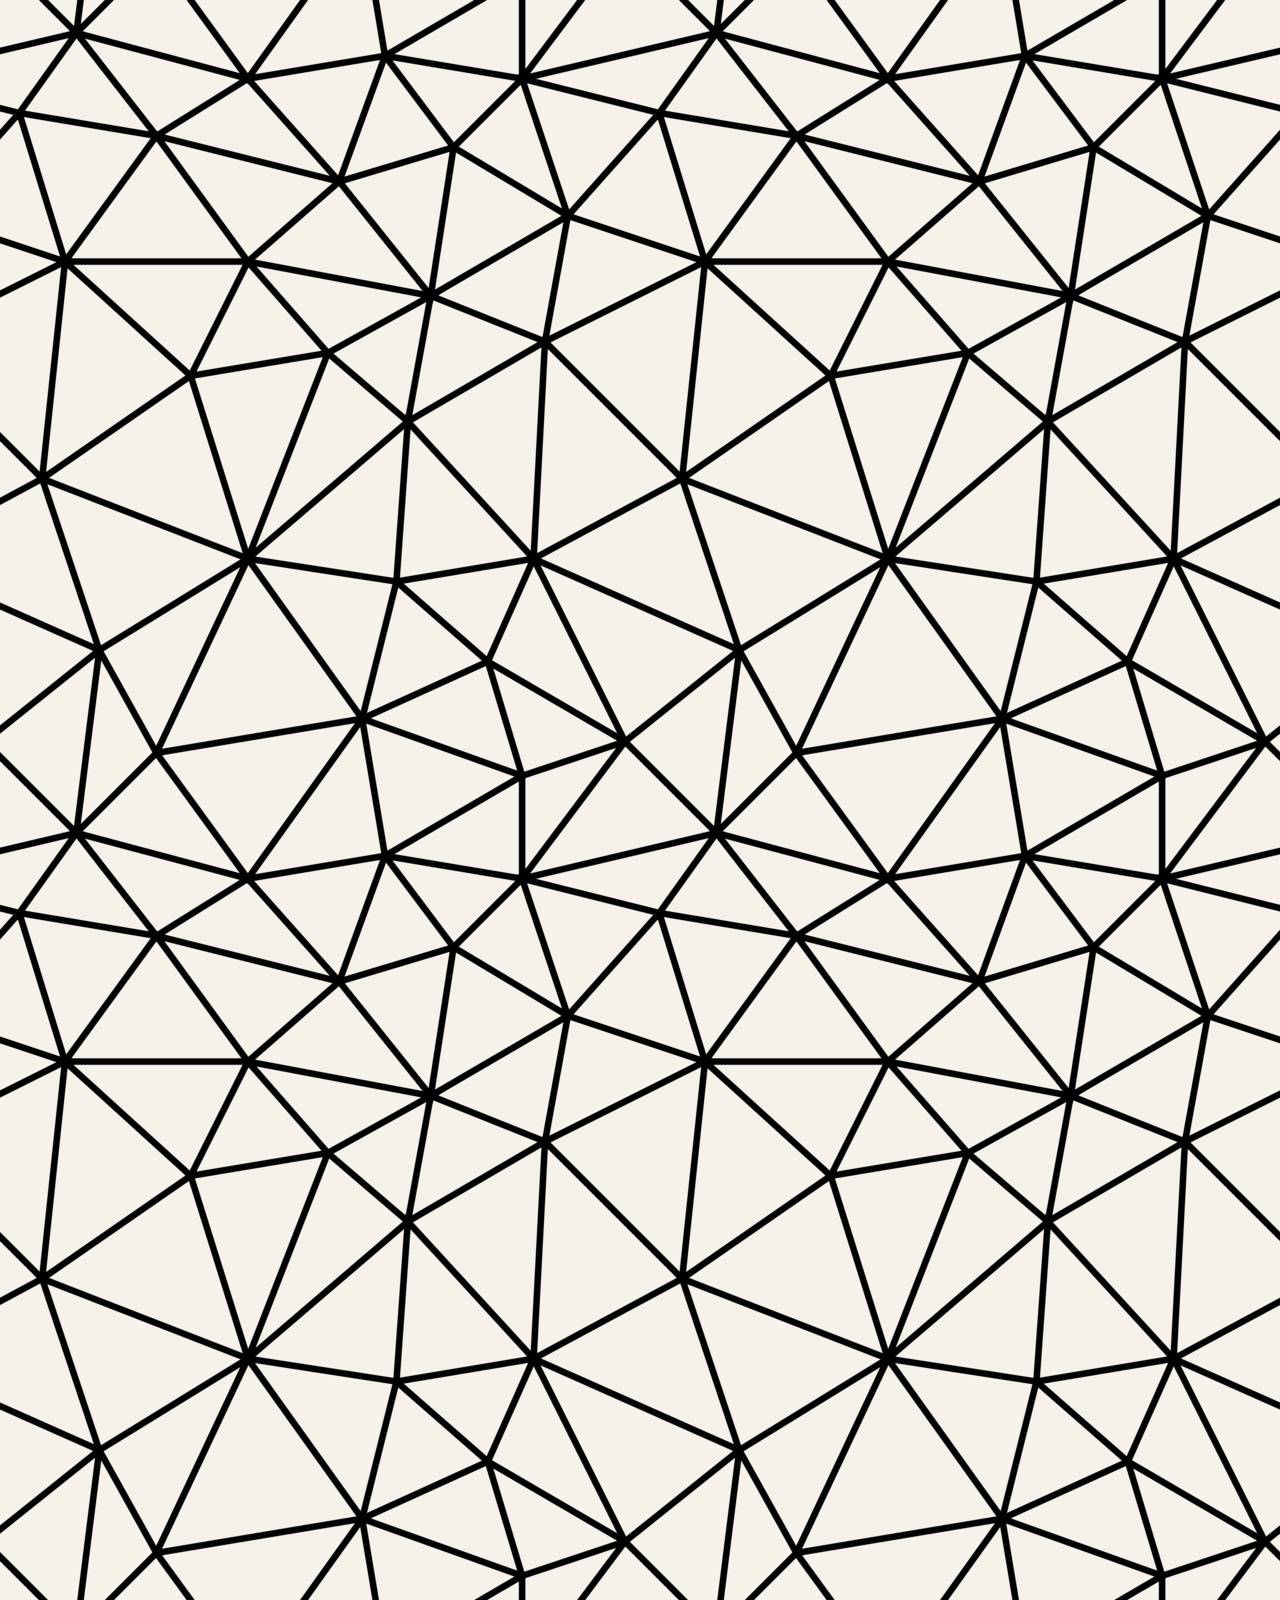 Polygonal seamless background by ratkomat